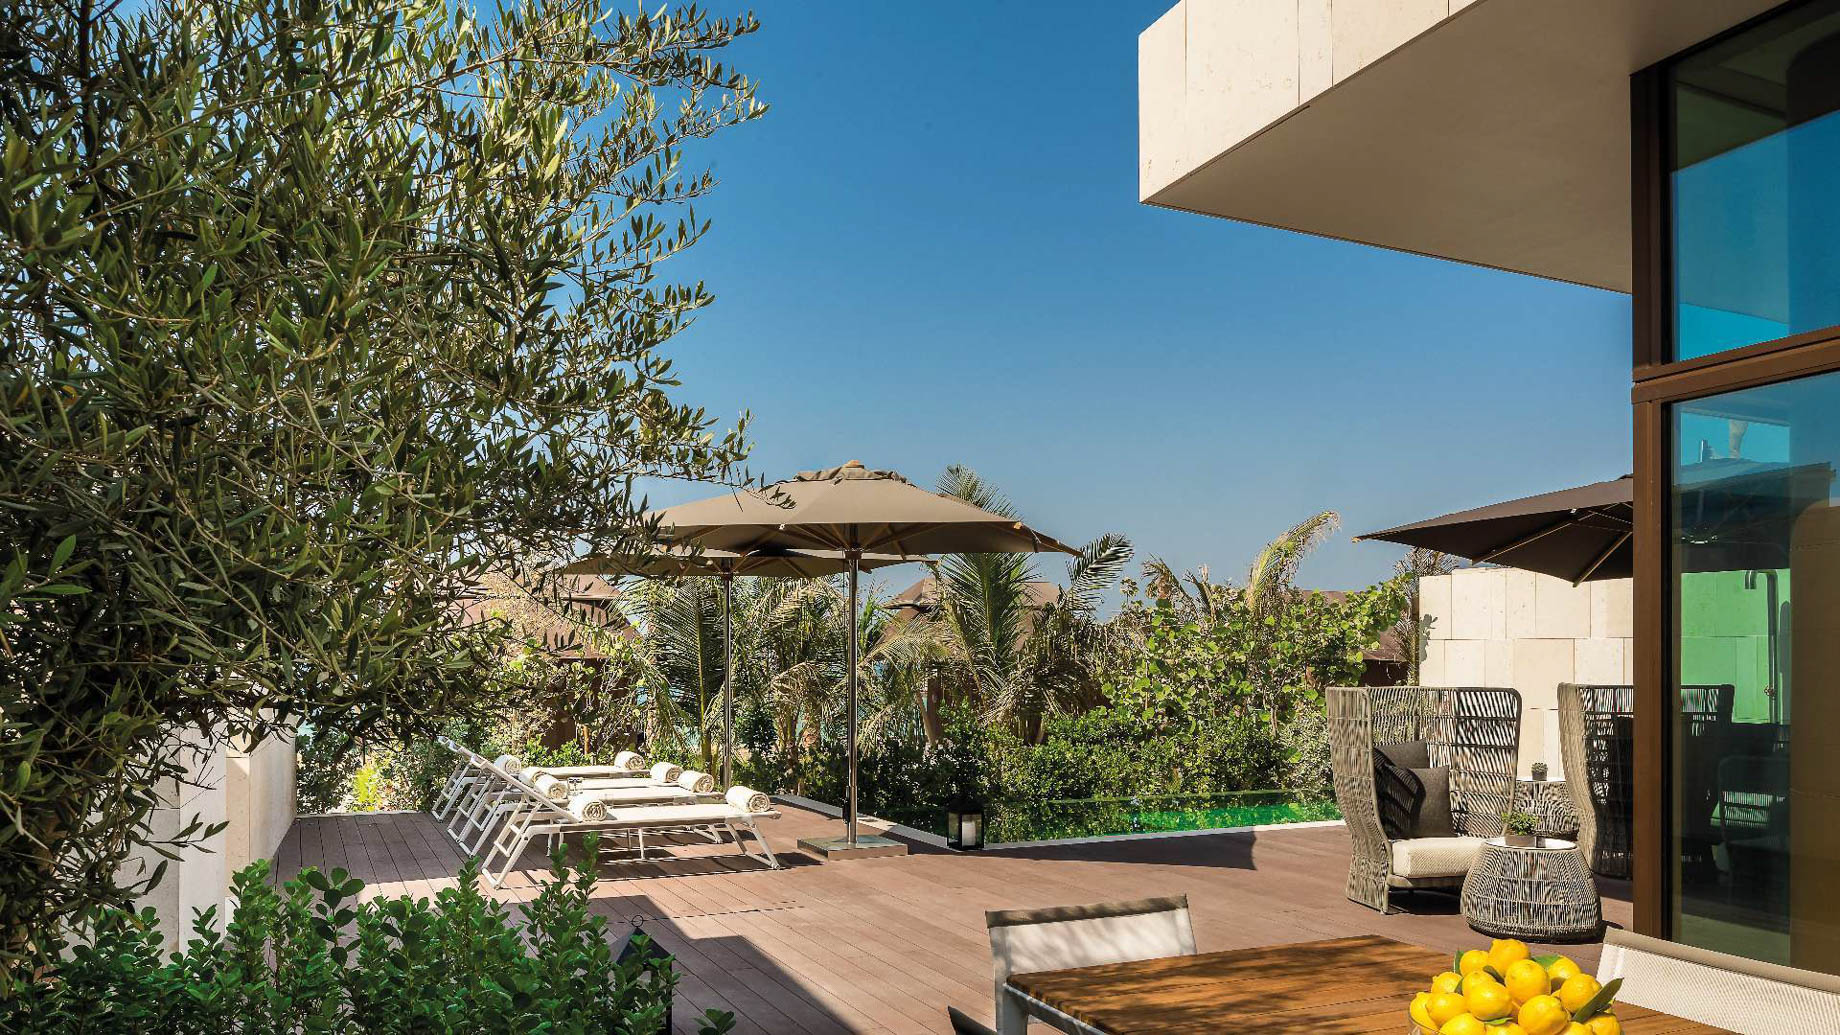 Bvlgari Resort Dubai – Jumeira Bay Island, Dubai, UAE – Exterior Deck